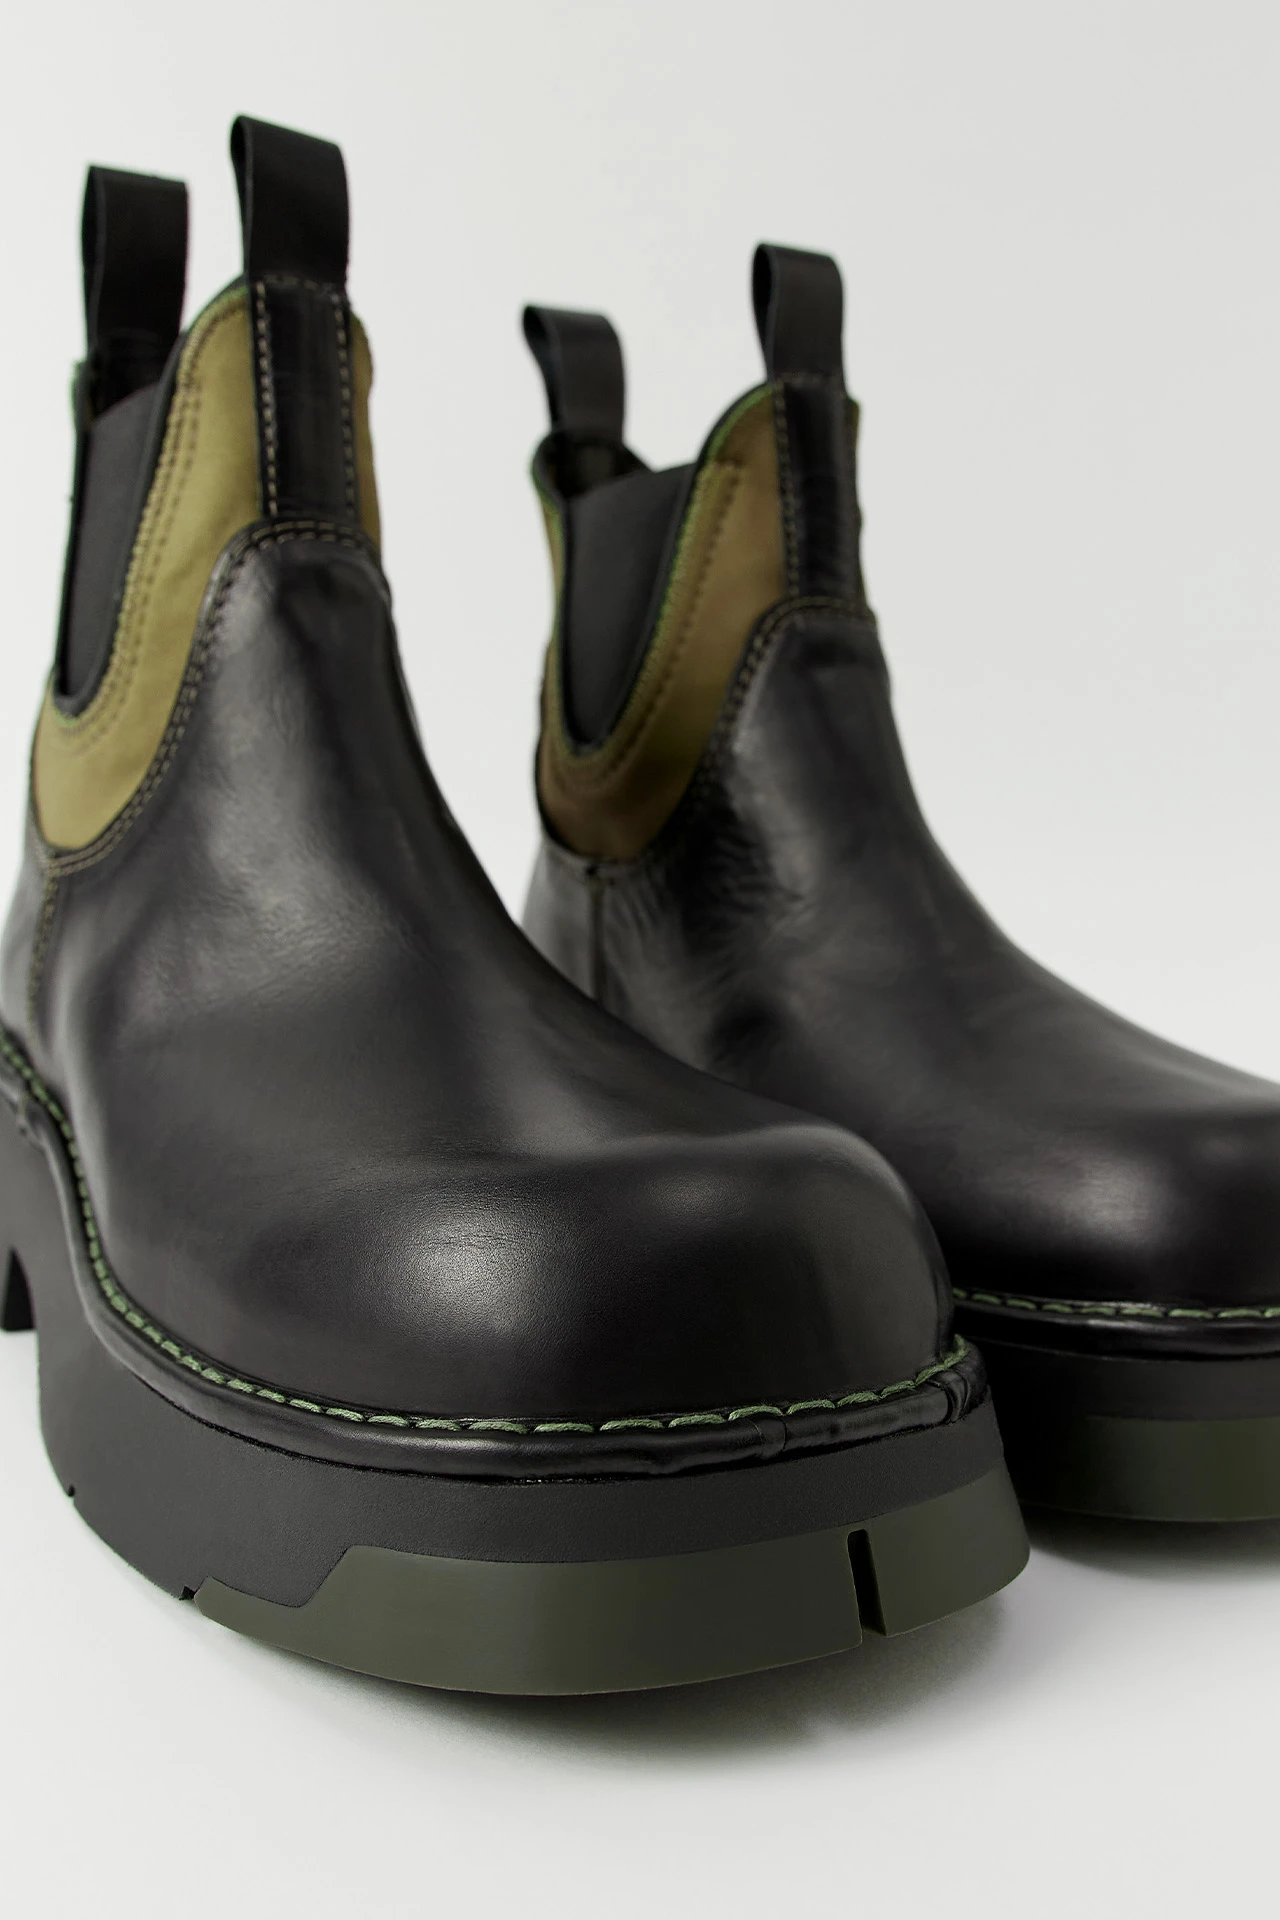 miista-kaya-black-ankle-boots-03